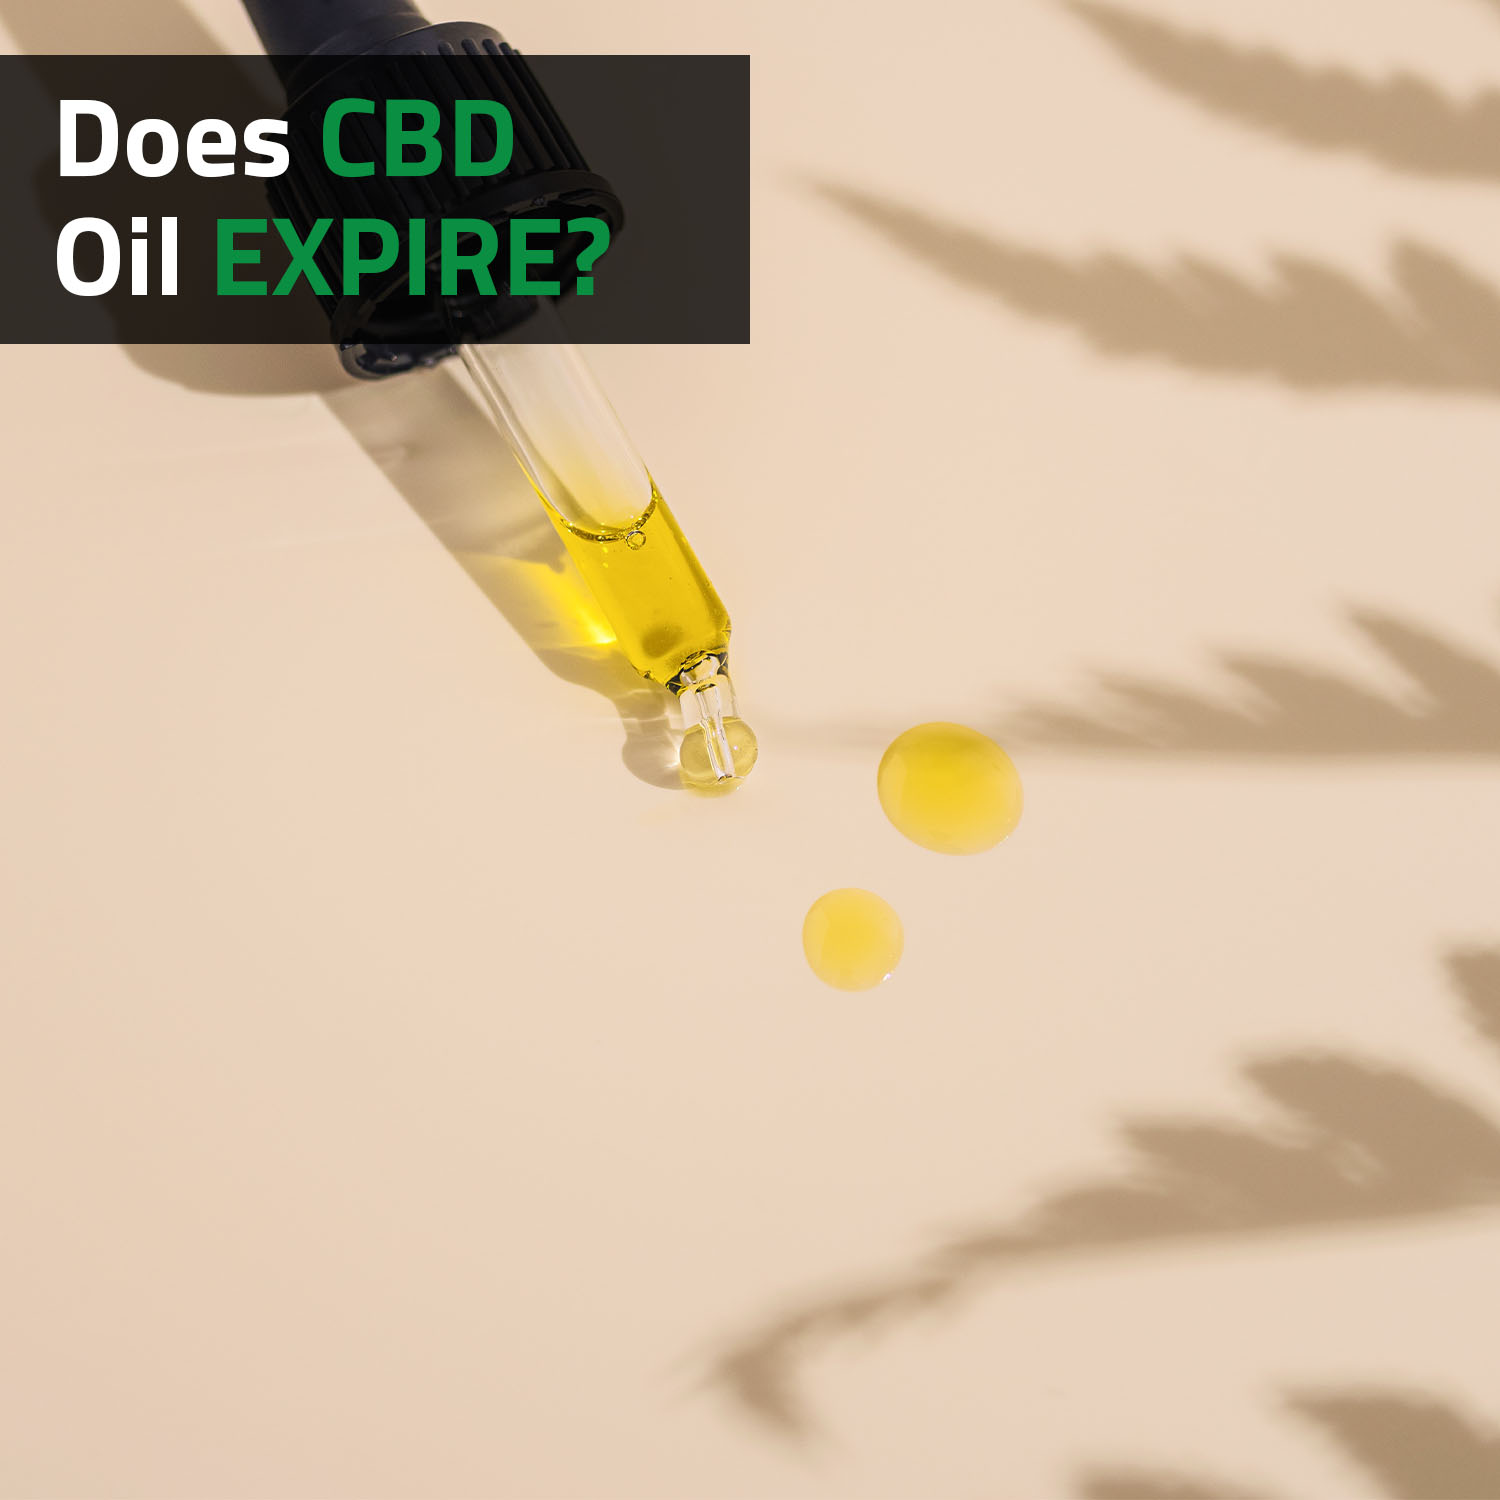 Does CBD Oil Expire?